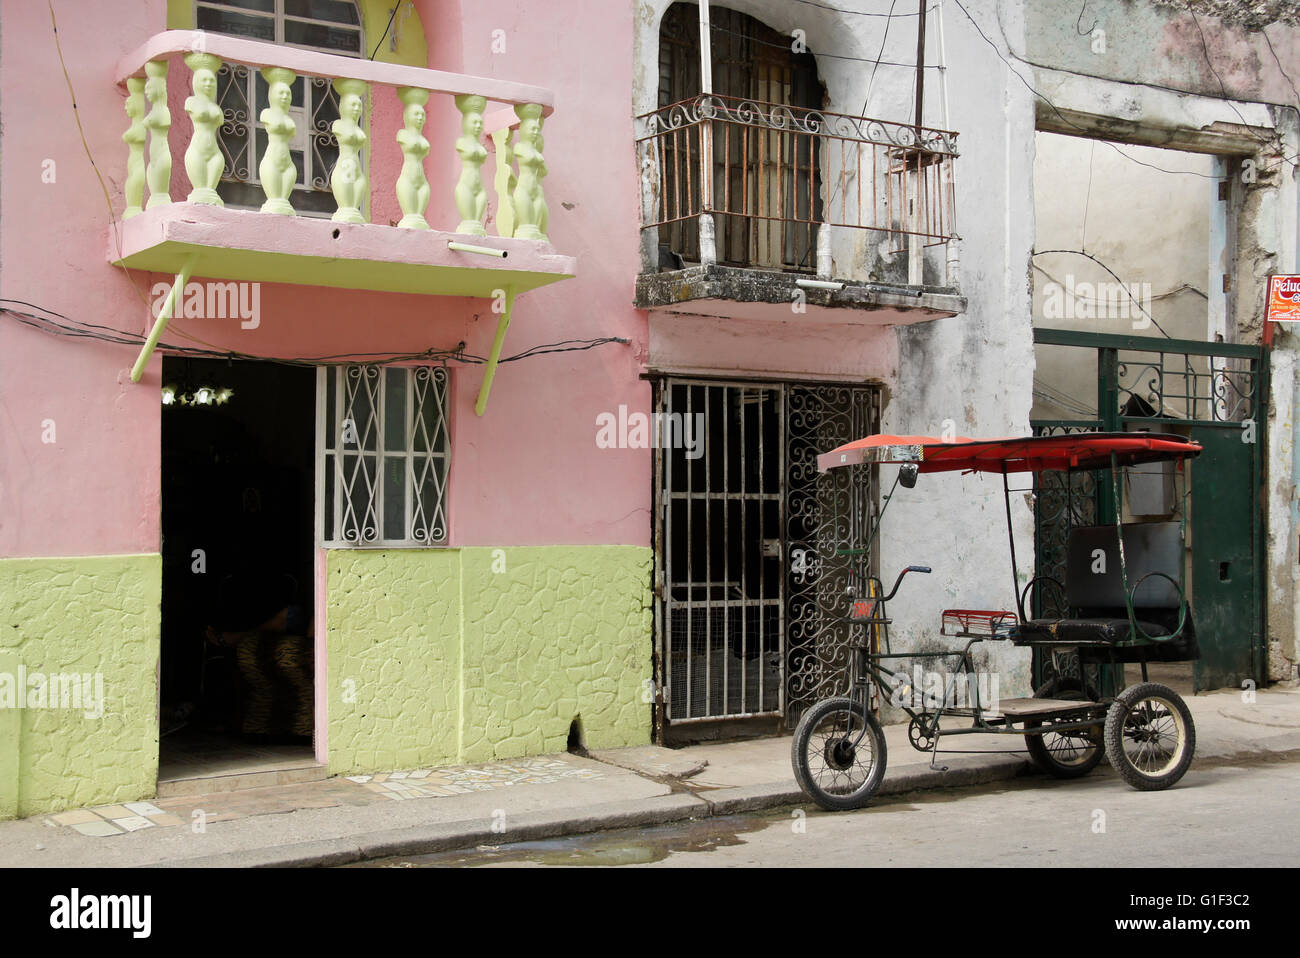 Bici-taxi outside old buildings, Havana, Cuba Stock Photo